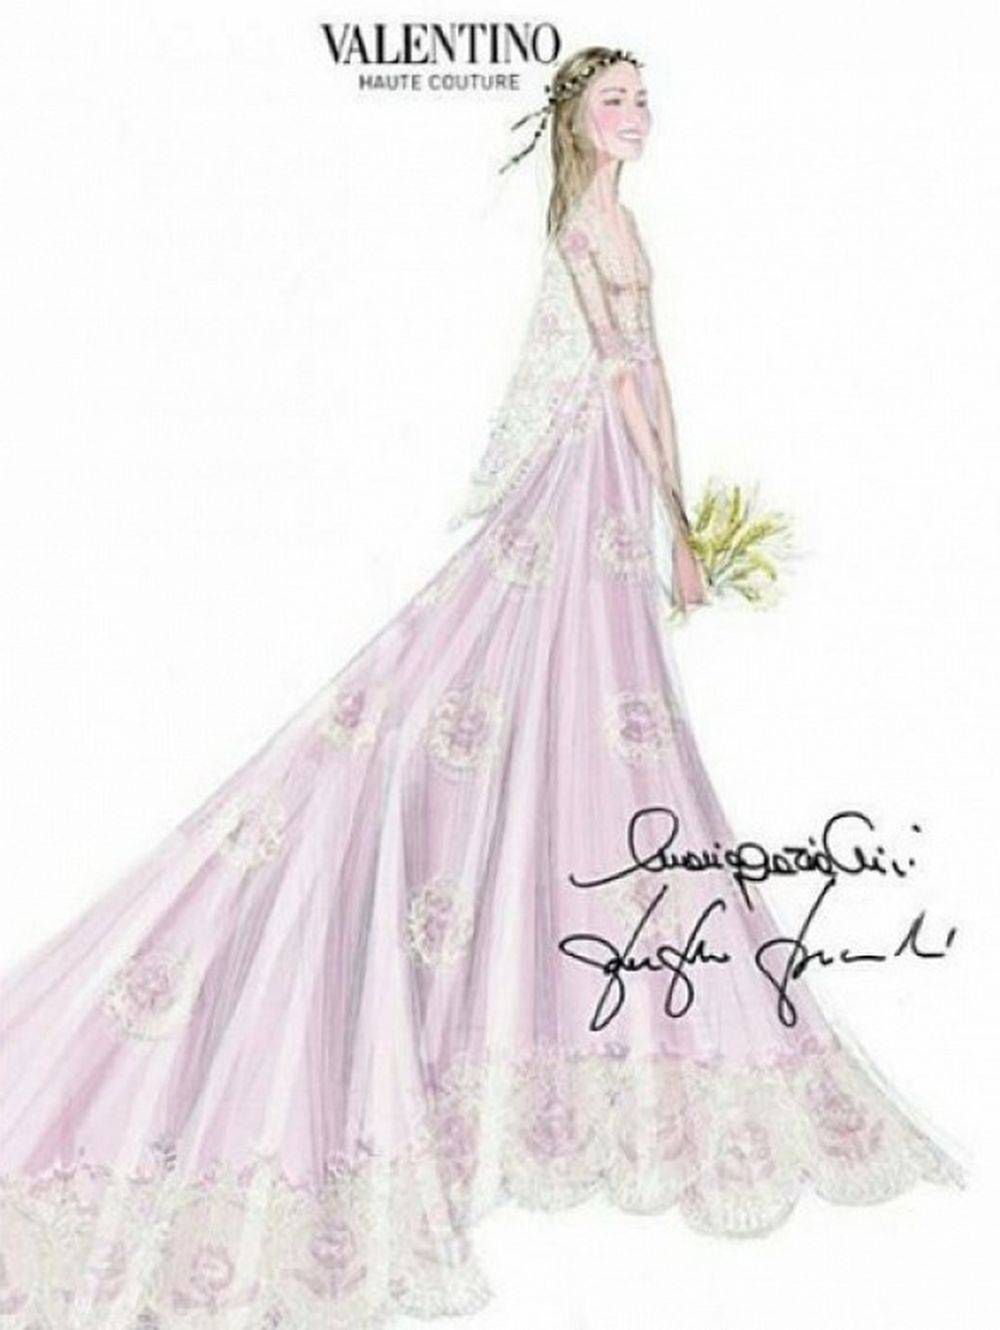 Suknia ślubna Beatrice Borromeo’s

Fot. Valentino